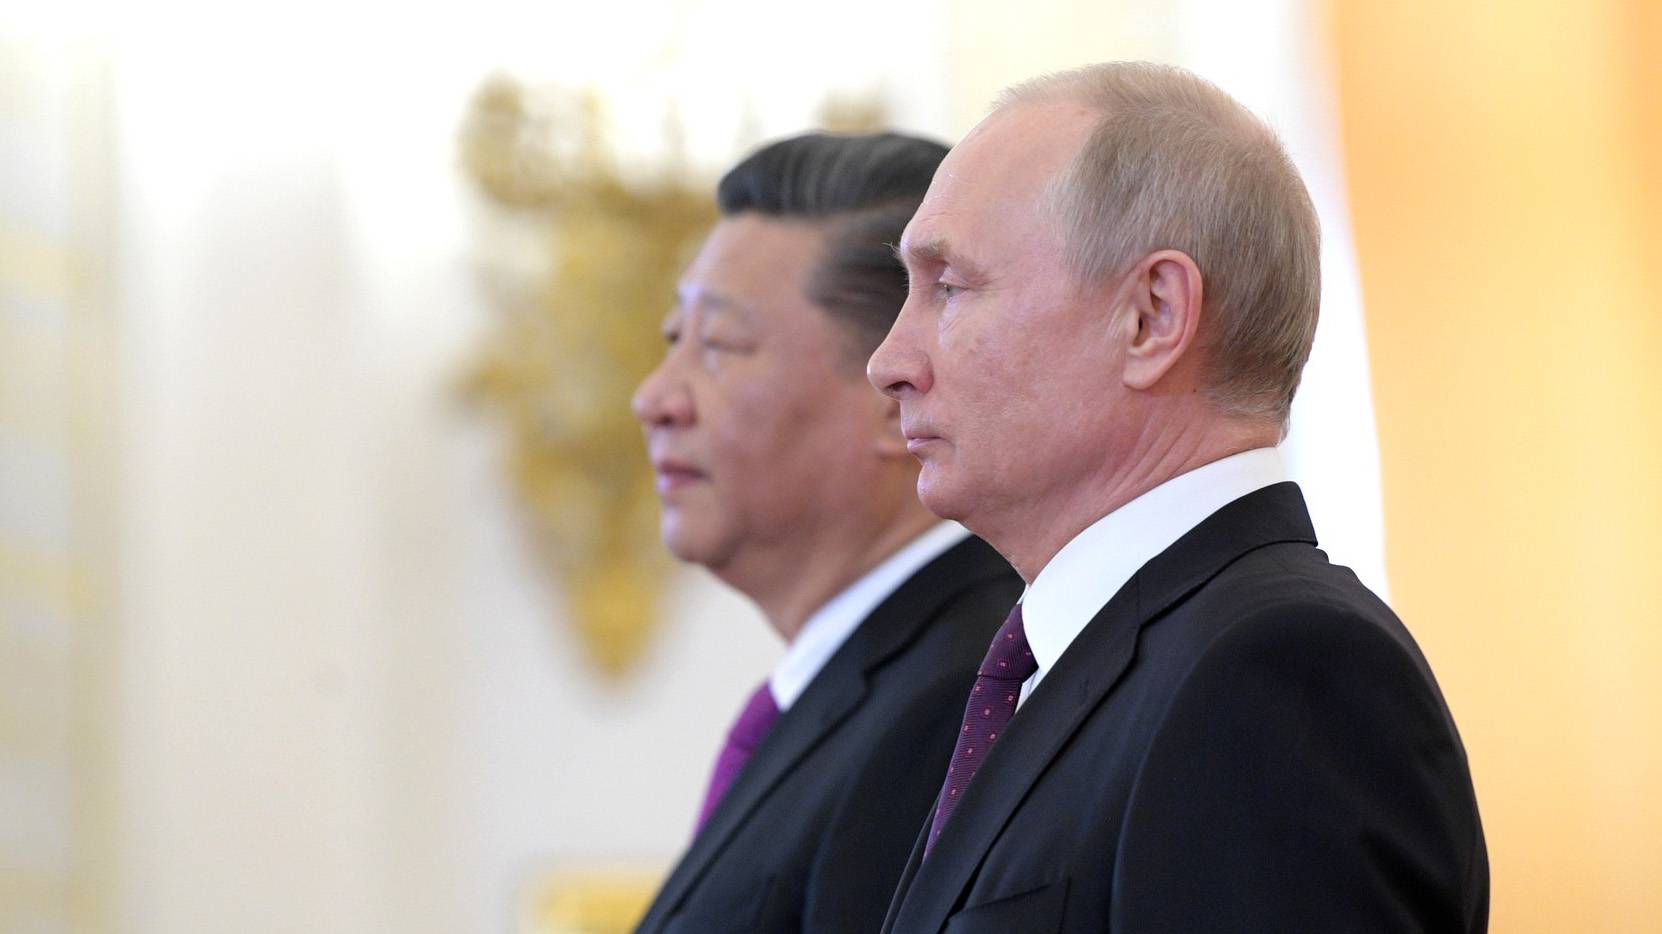 Turkiye Gazetesi: снимок Путина в Пекине заставил нервничать Байдена